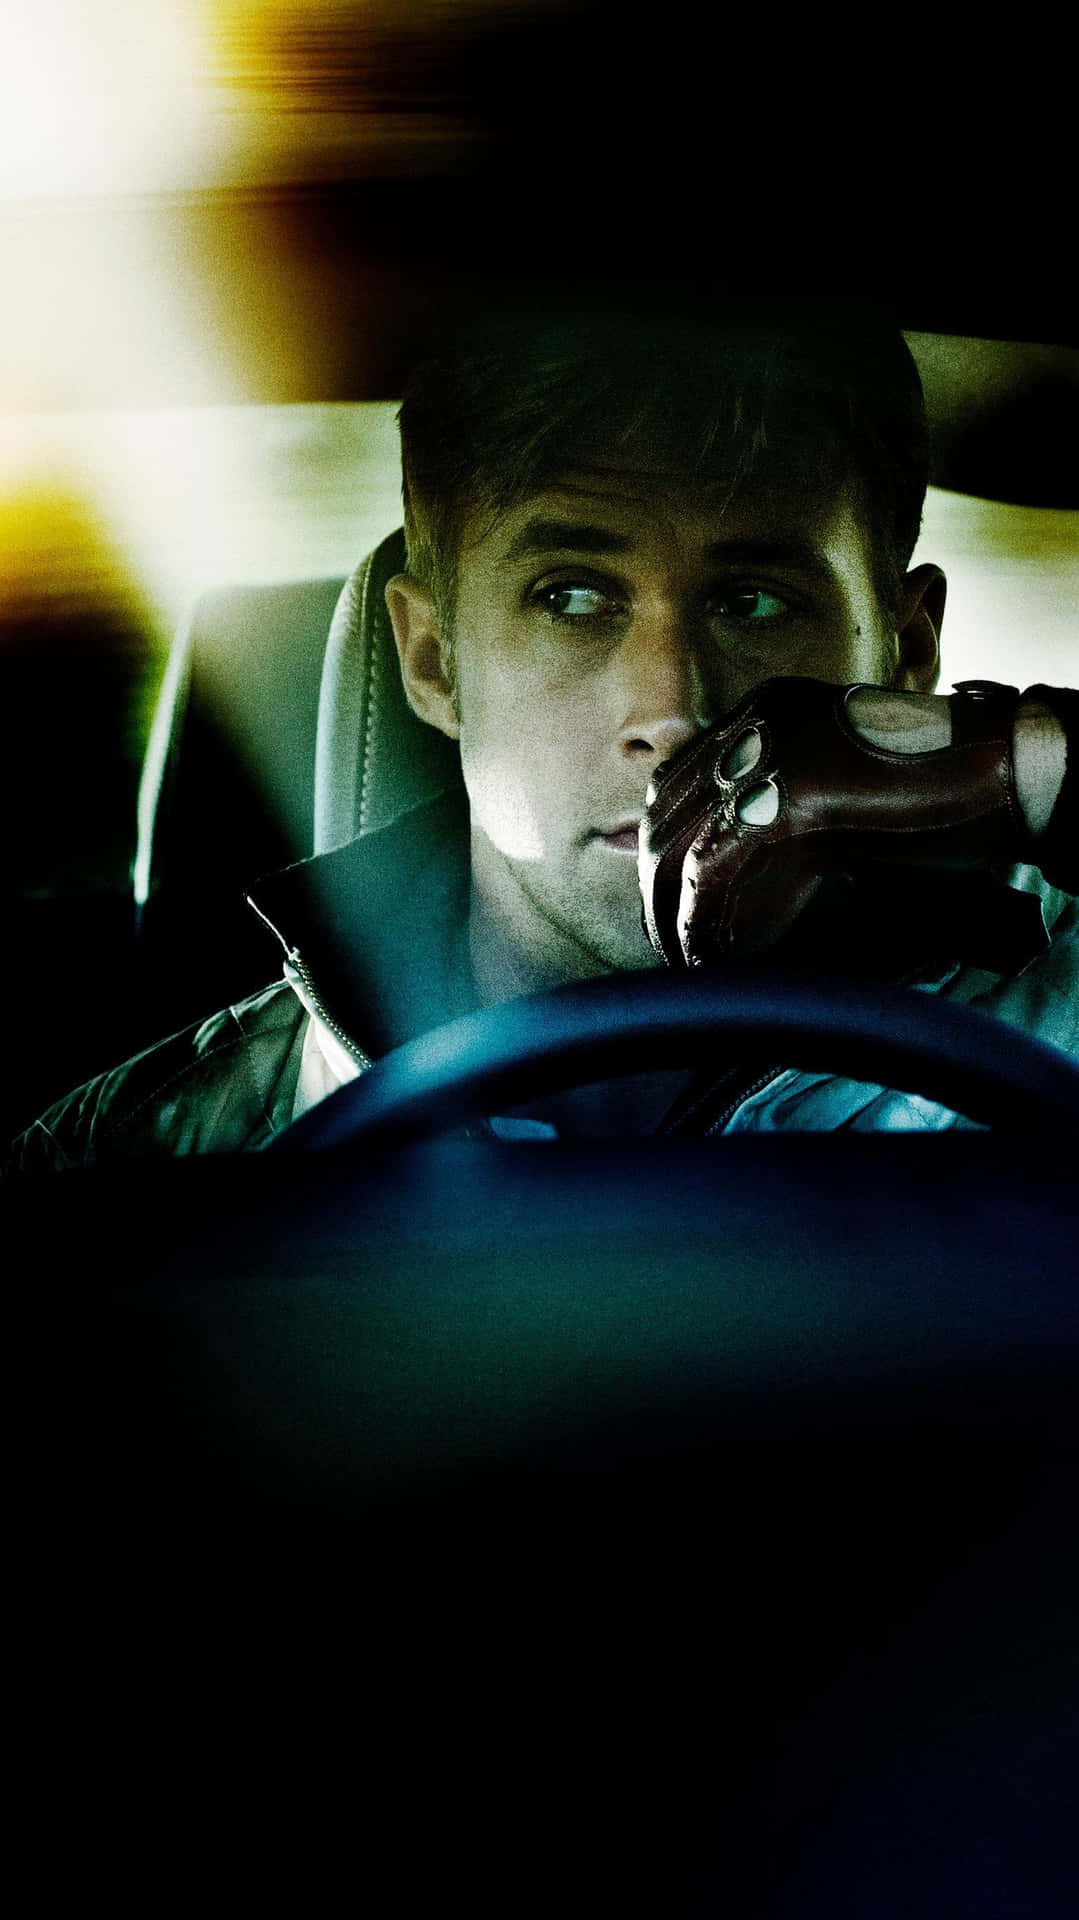 Intense Driver Portrait Nighttime Background